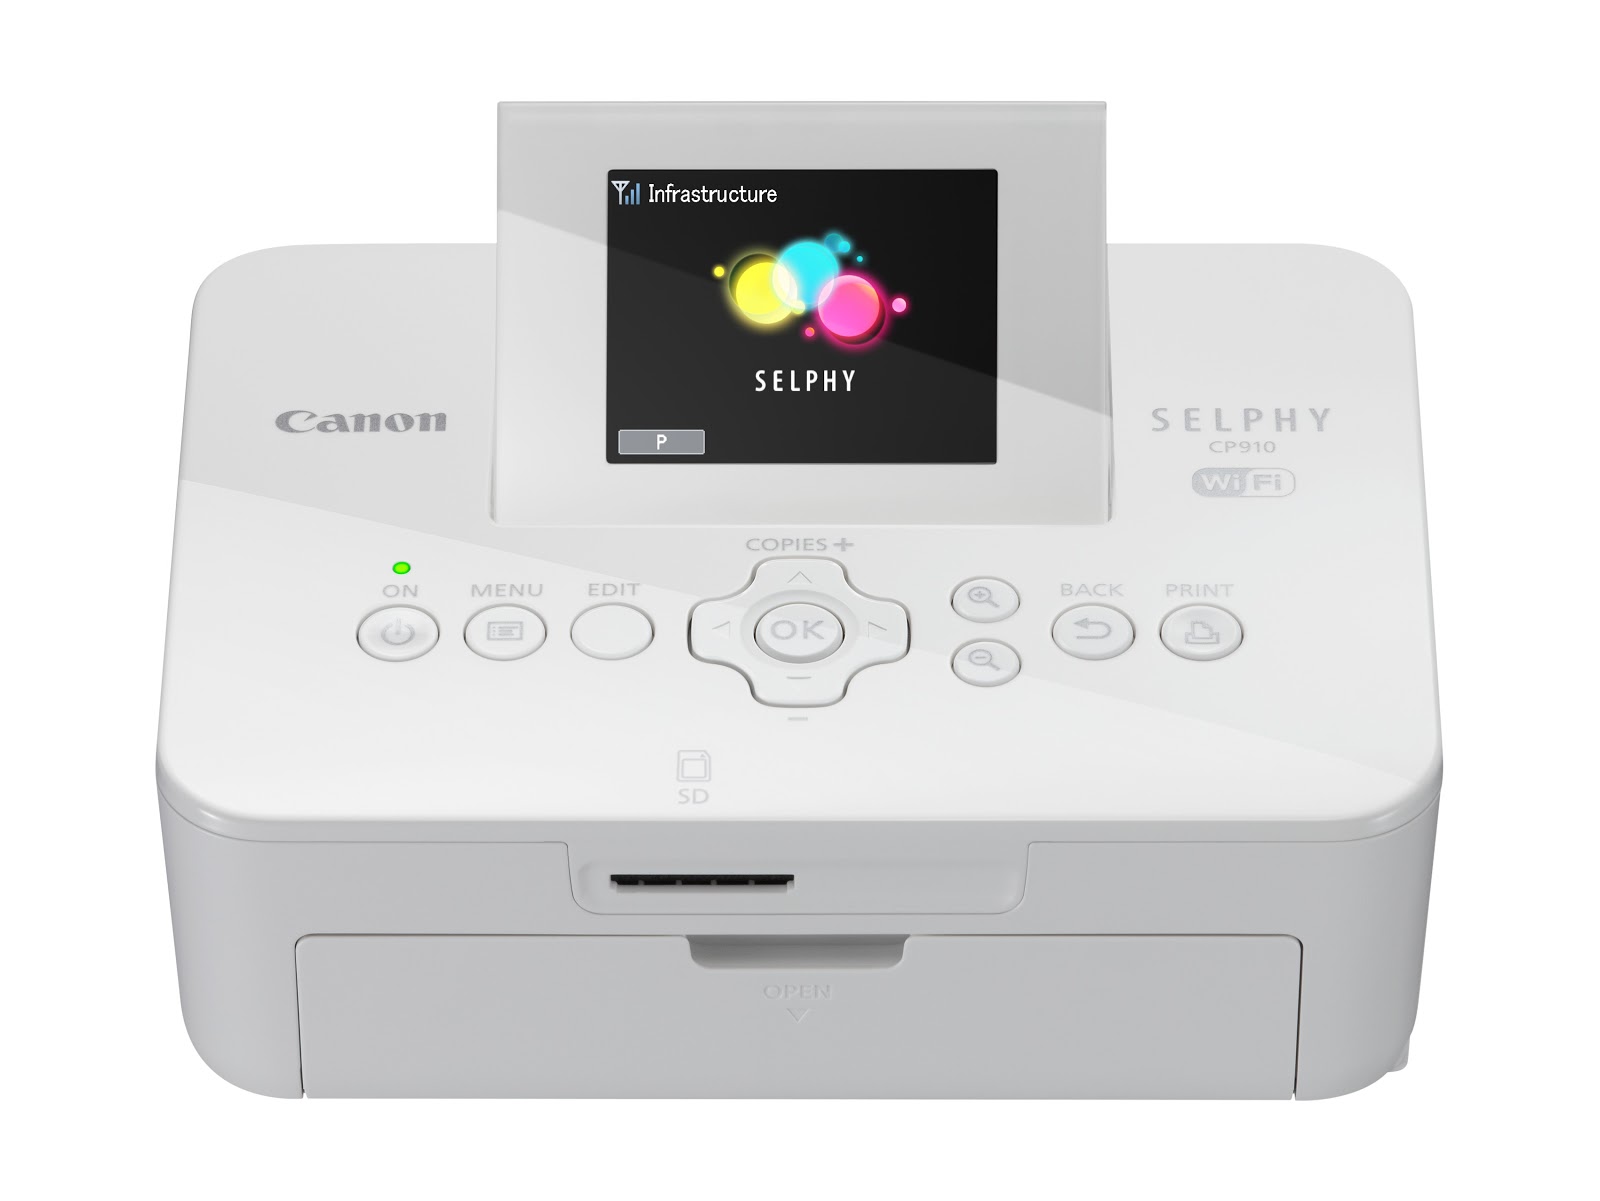 Canon Selphy CP910 Printer Review - Ortolana Clare